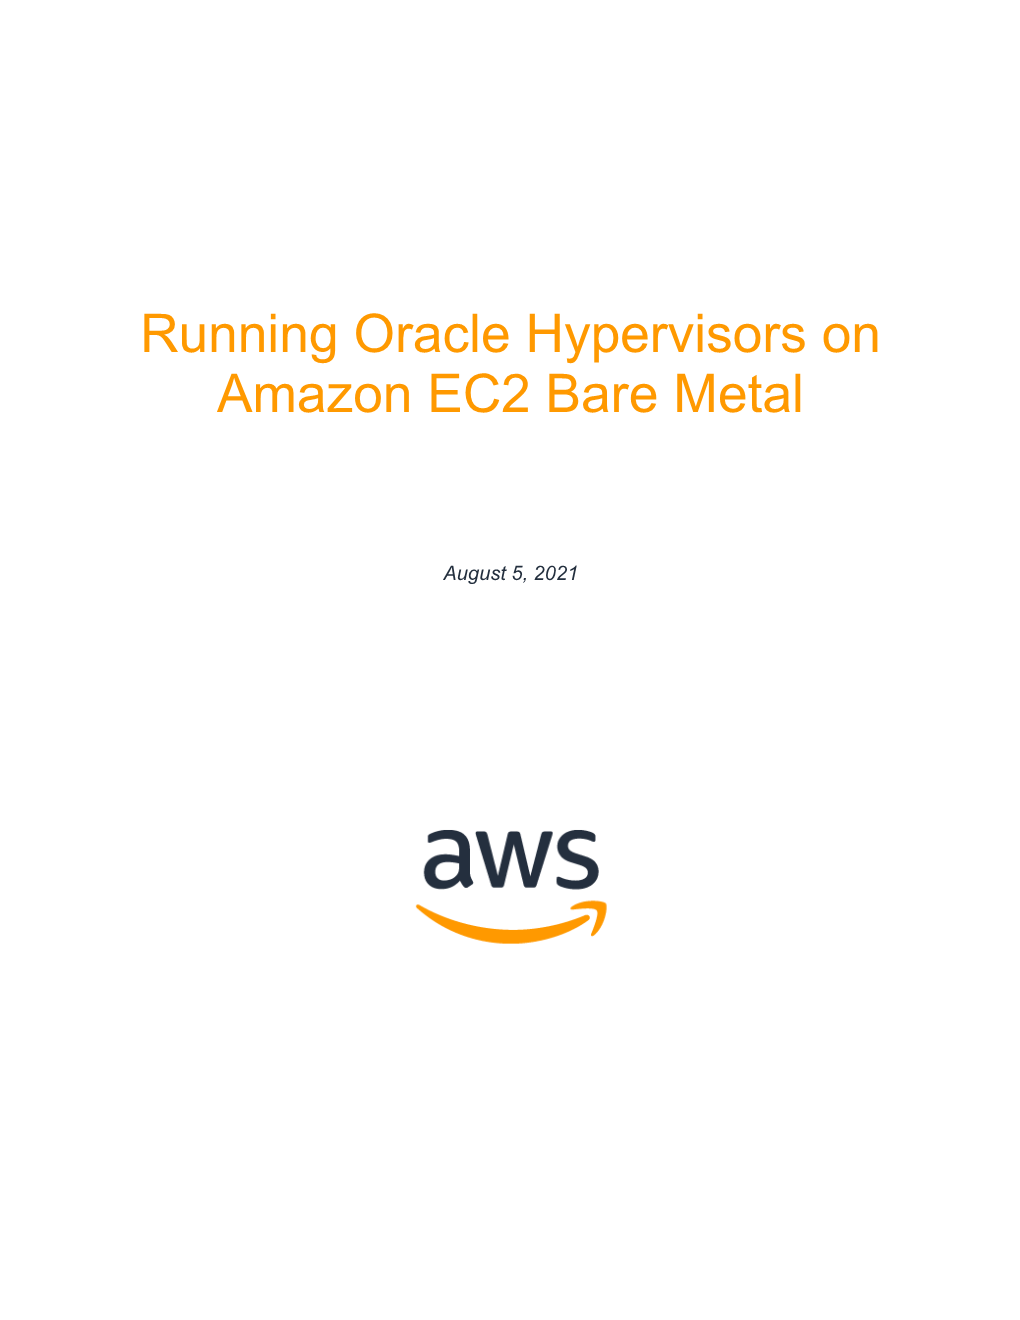 Running Oracle Hypervisors on Amazon EC2 Bare Metal